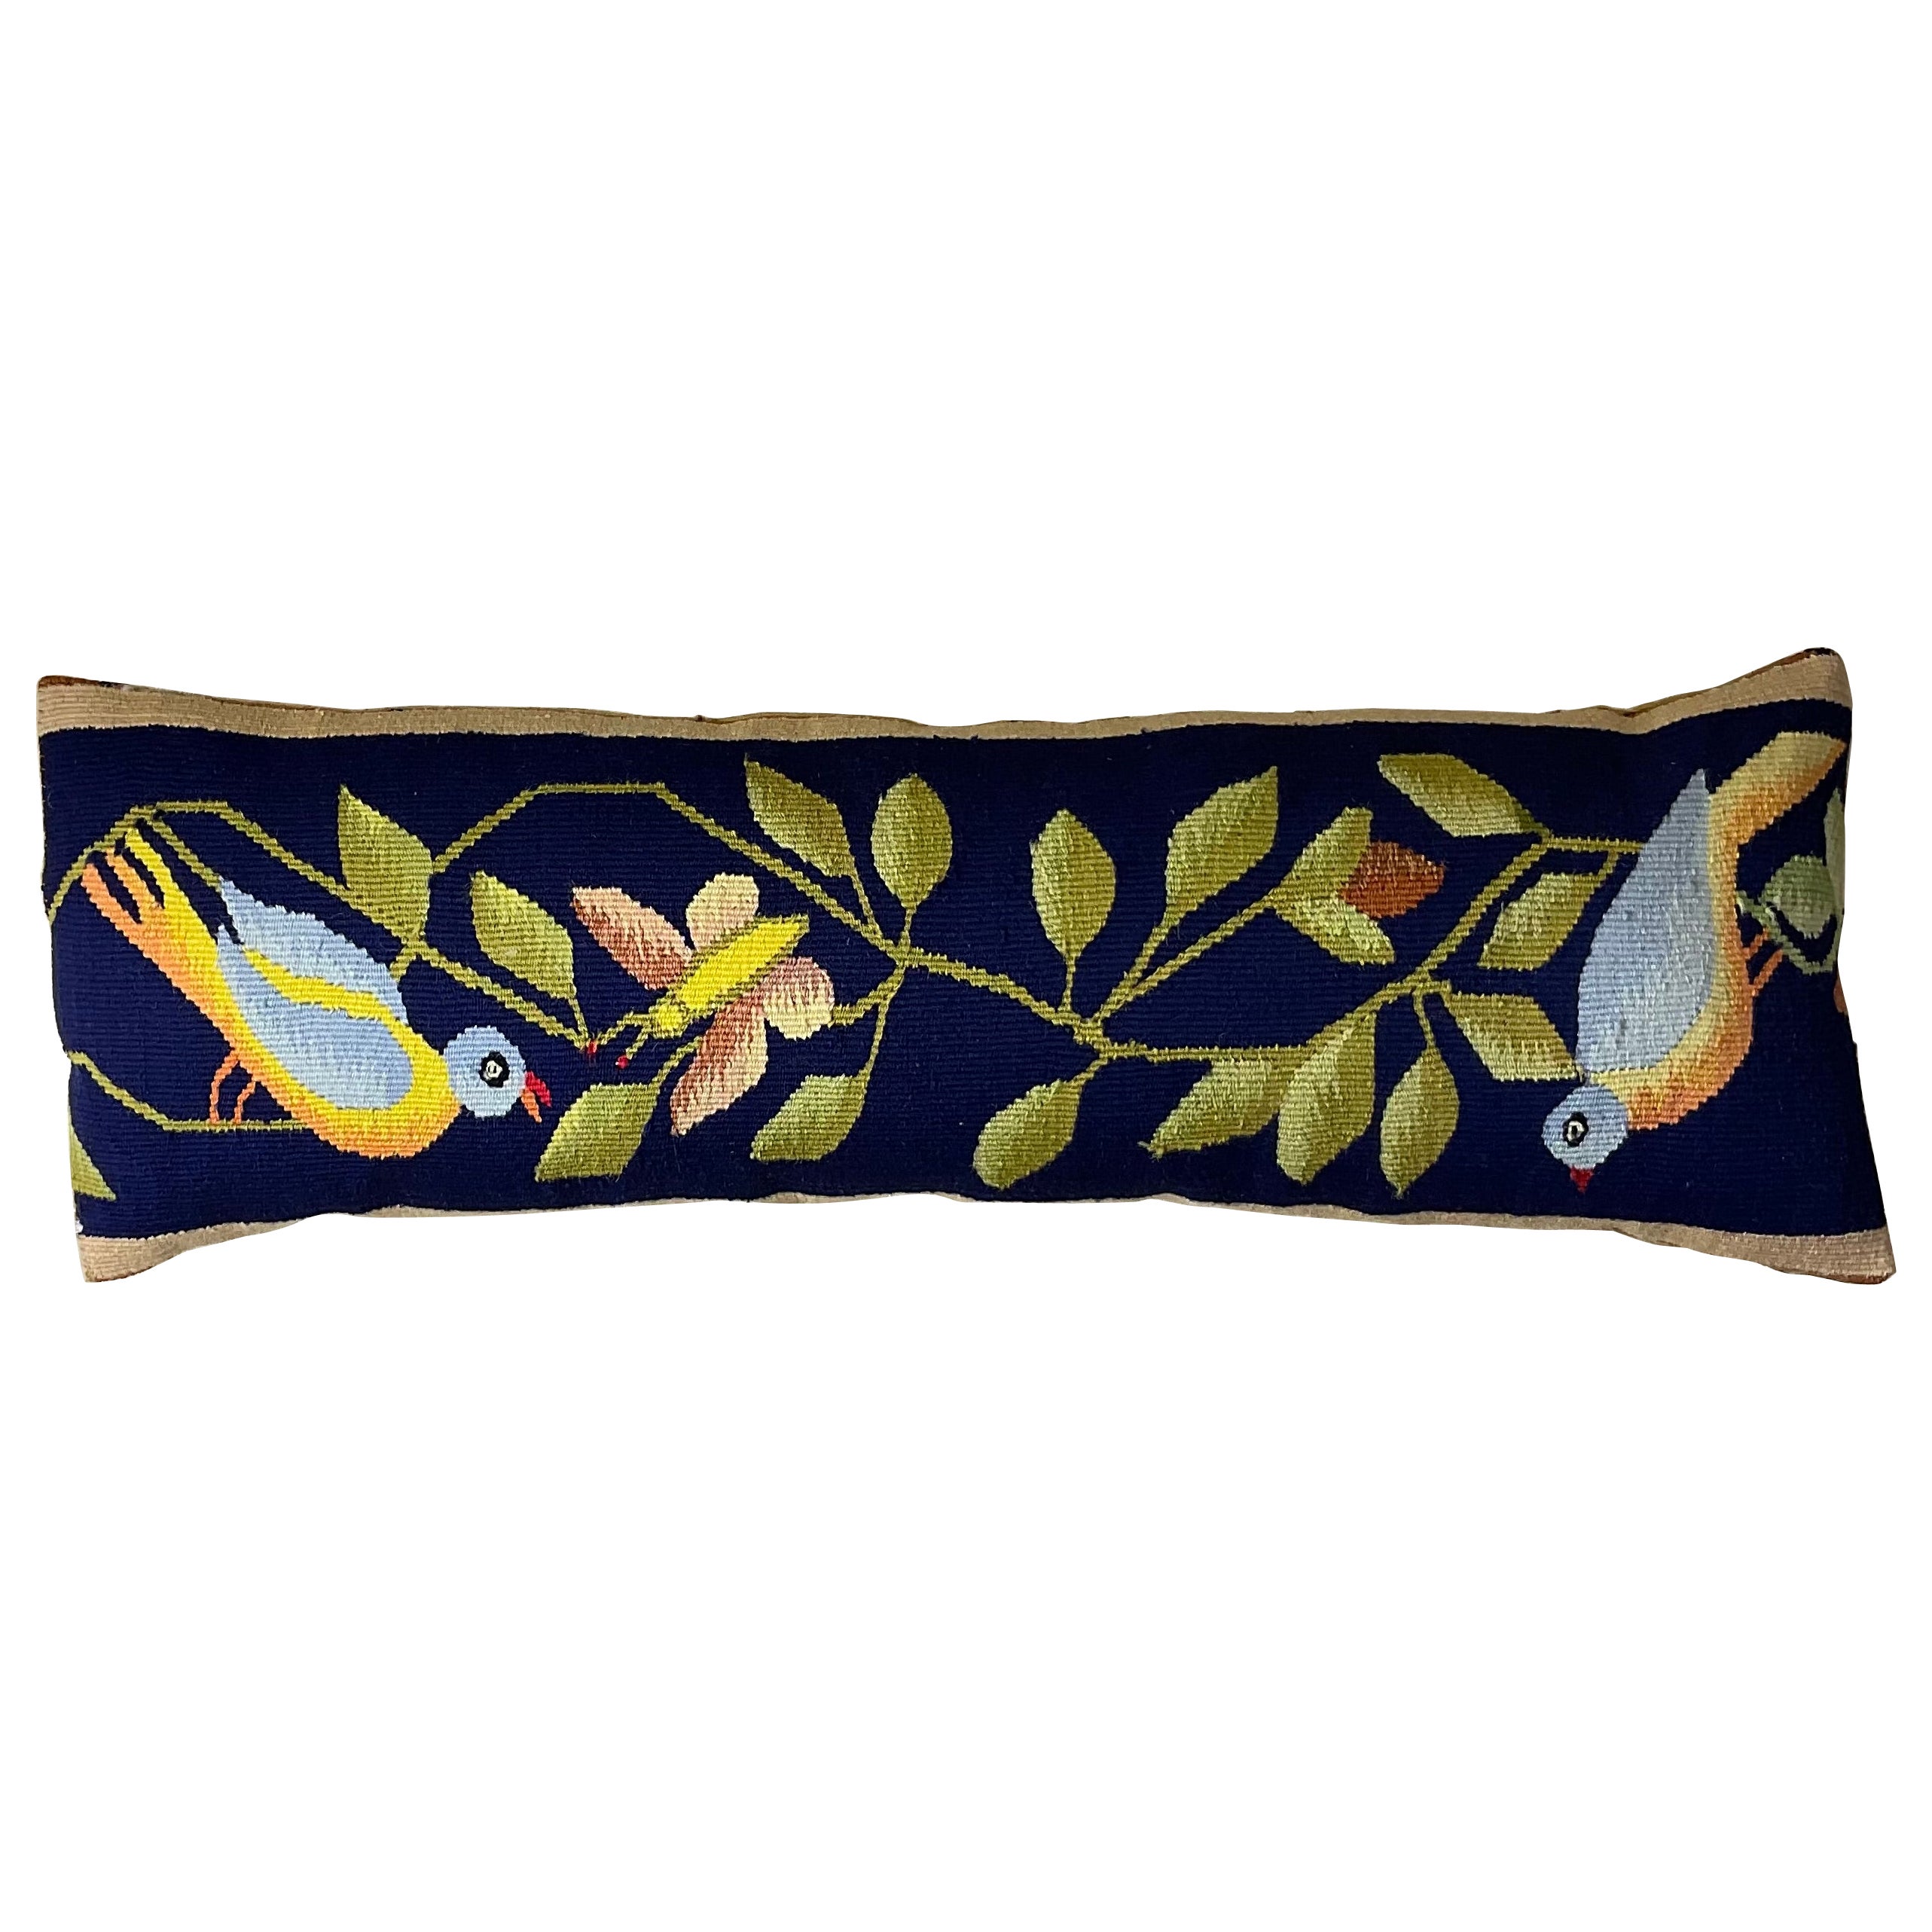 Elegant Single Decorative Hand Woven Pillow